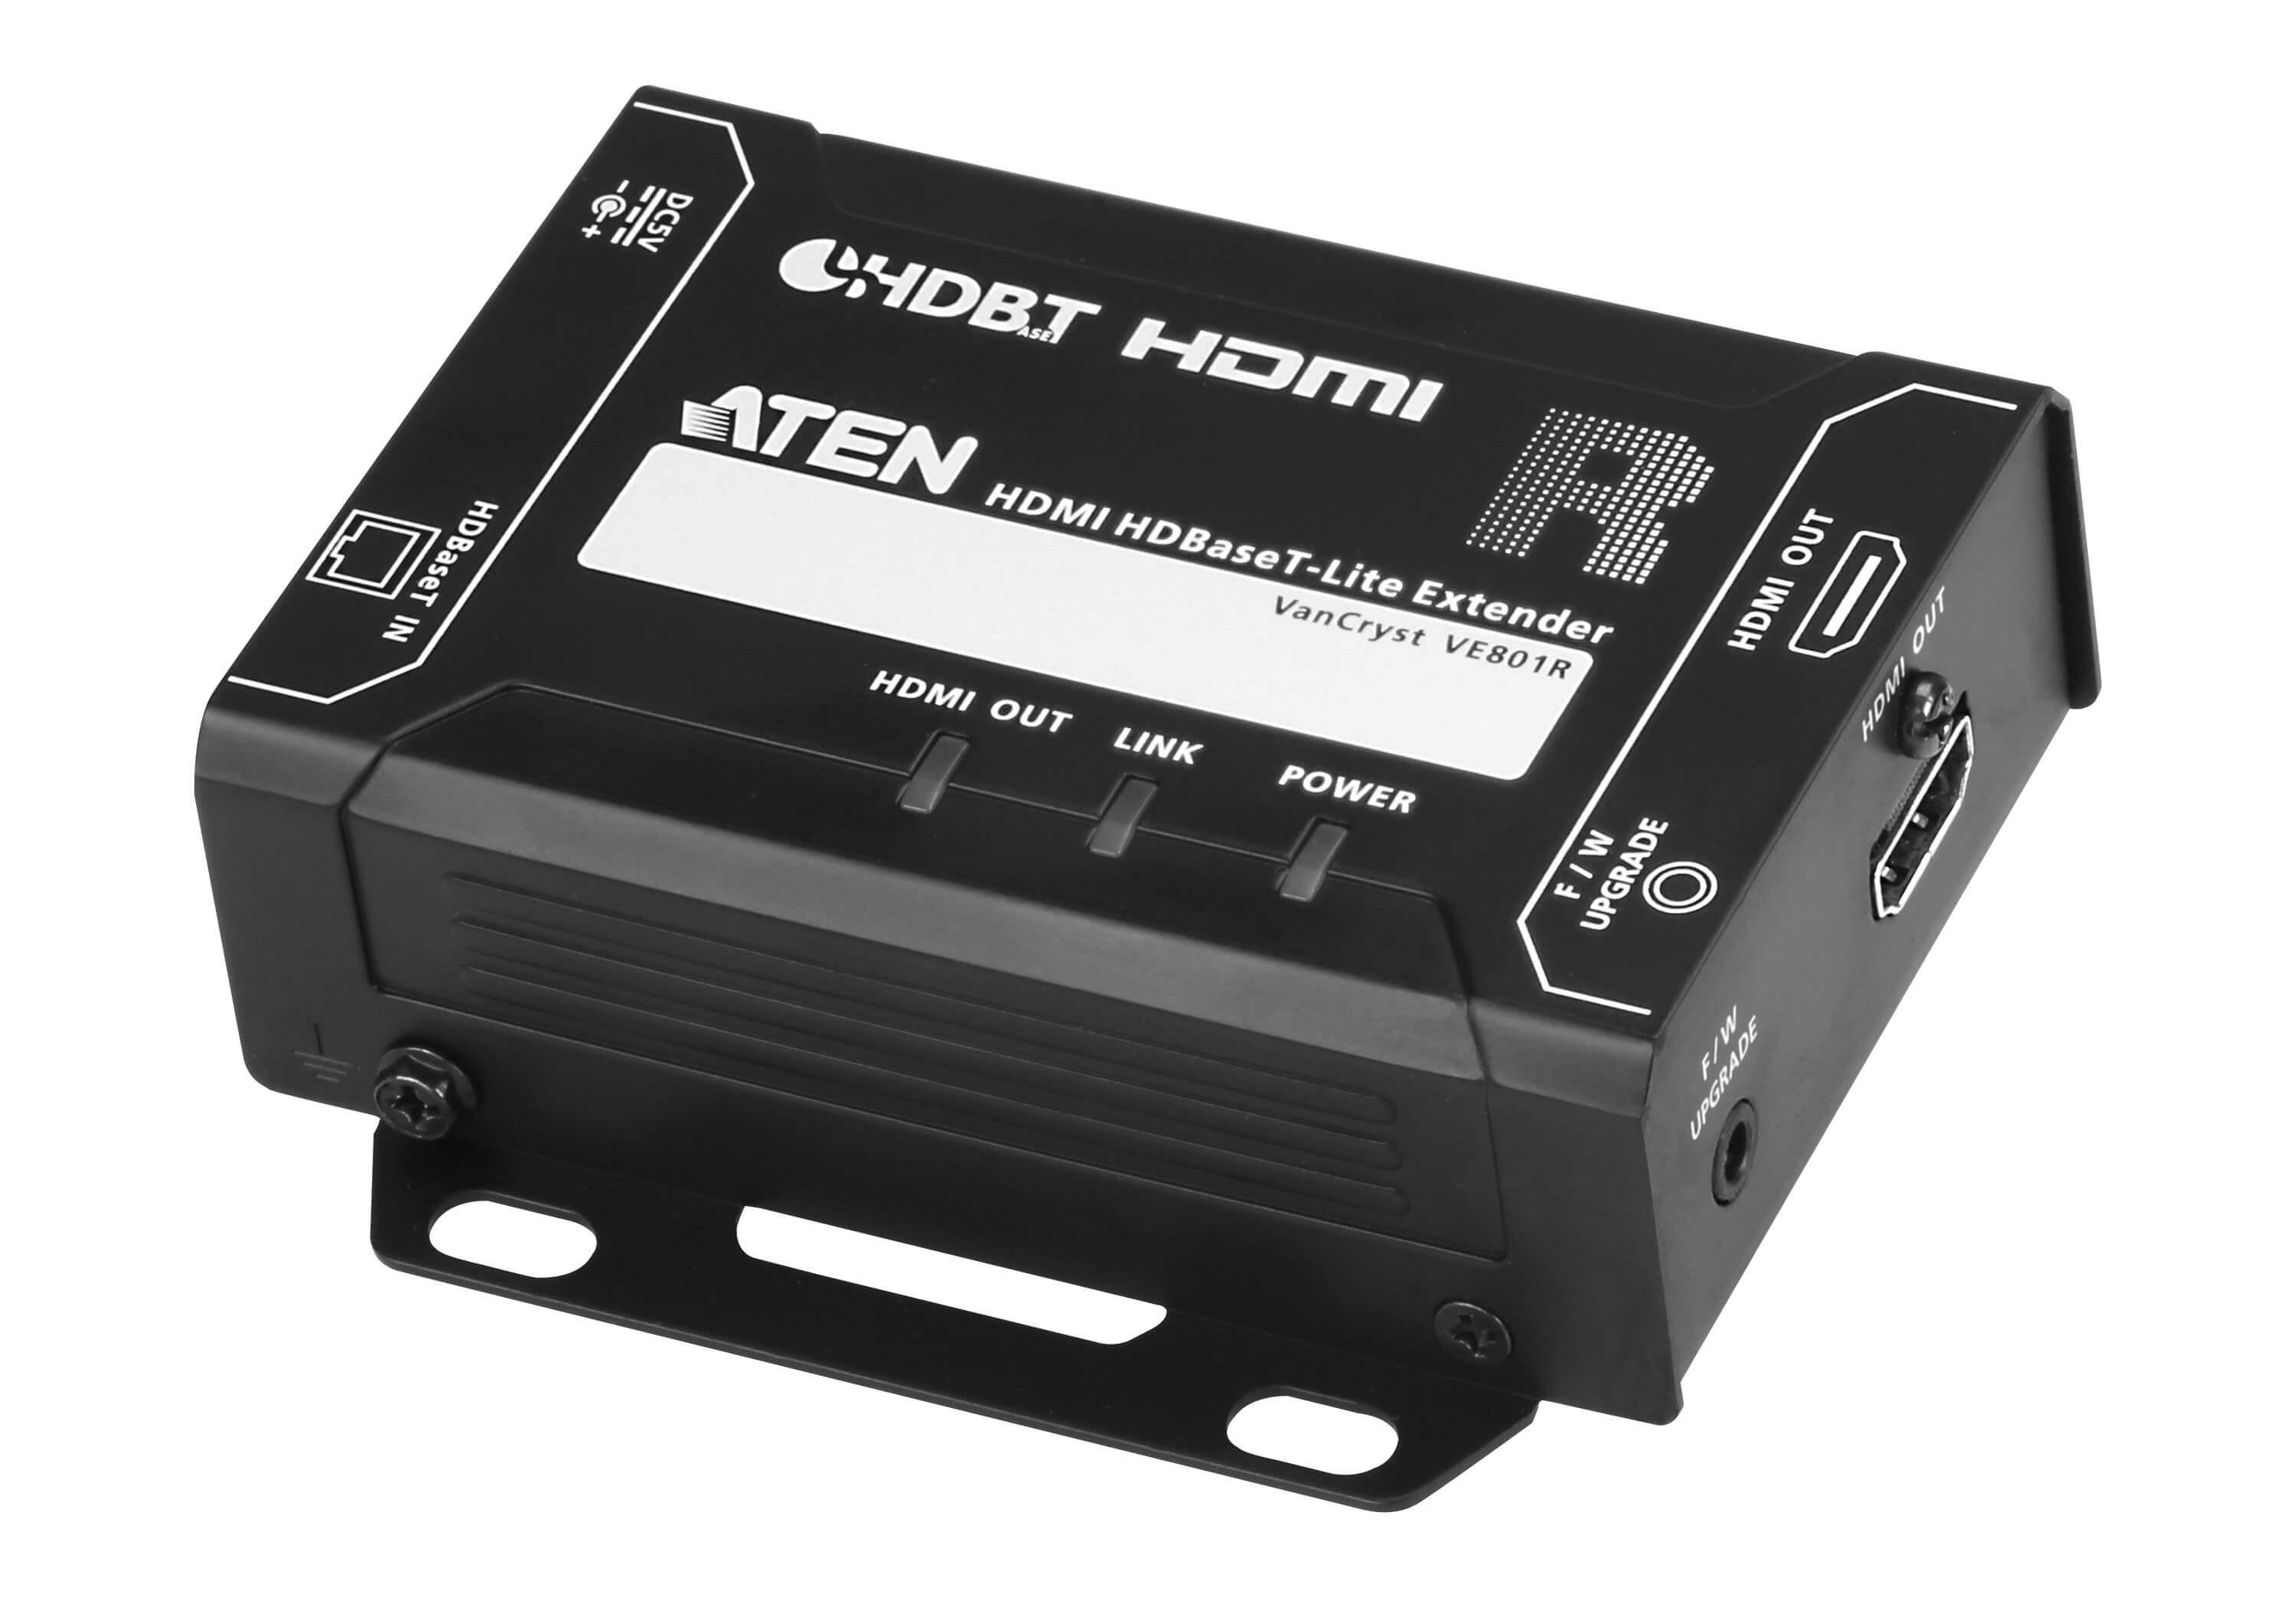 Aten Extender, HDMI, HDBaseT - Lite, Receiver - VE801R